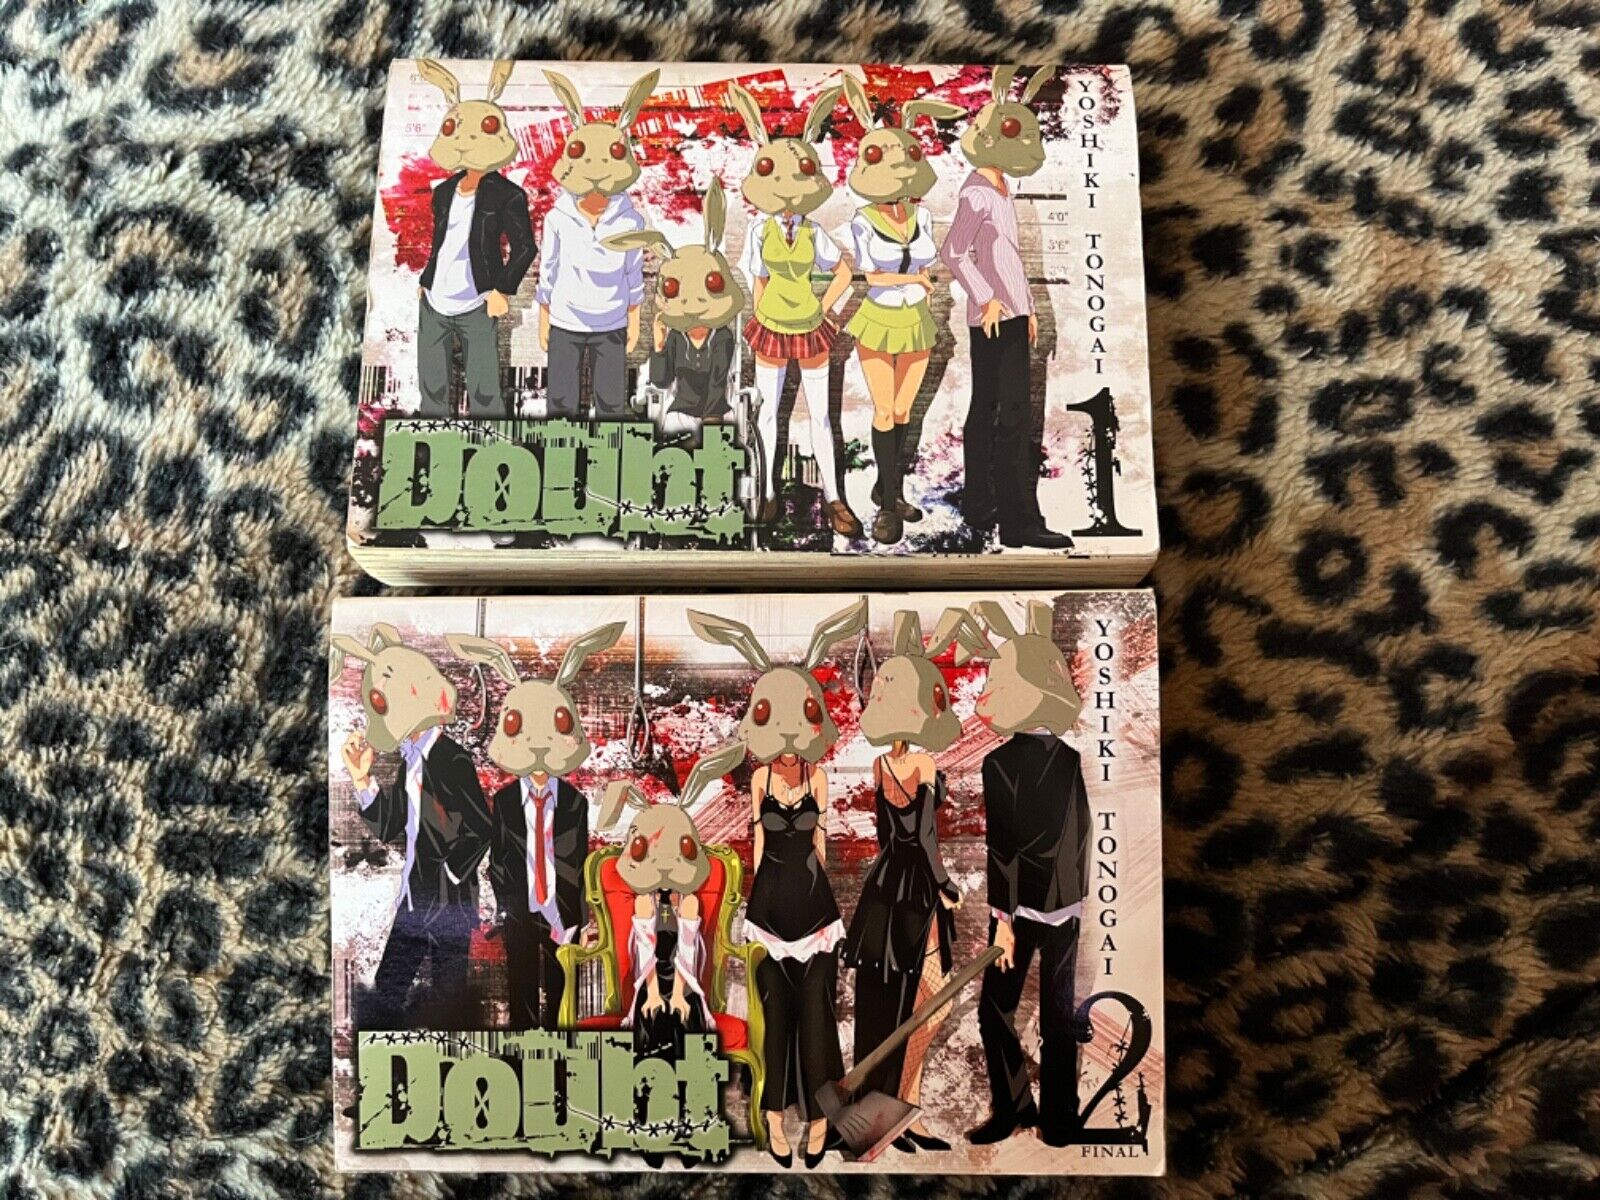 DOUBT - Vol. 1 & 2 Manga by Yoshiki Tonogai: Rabbit Doubt - A Mobile Phone Game